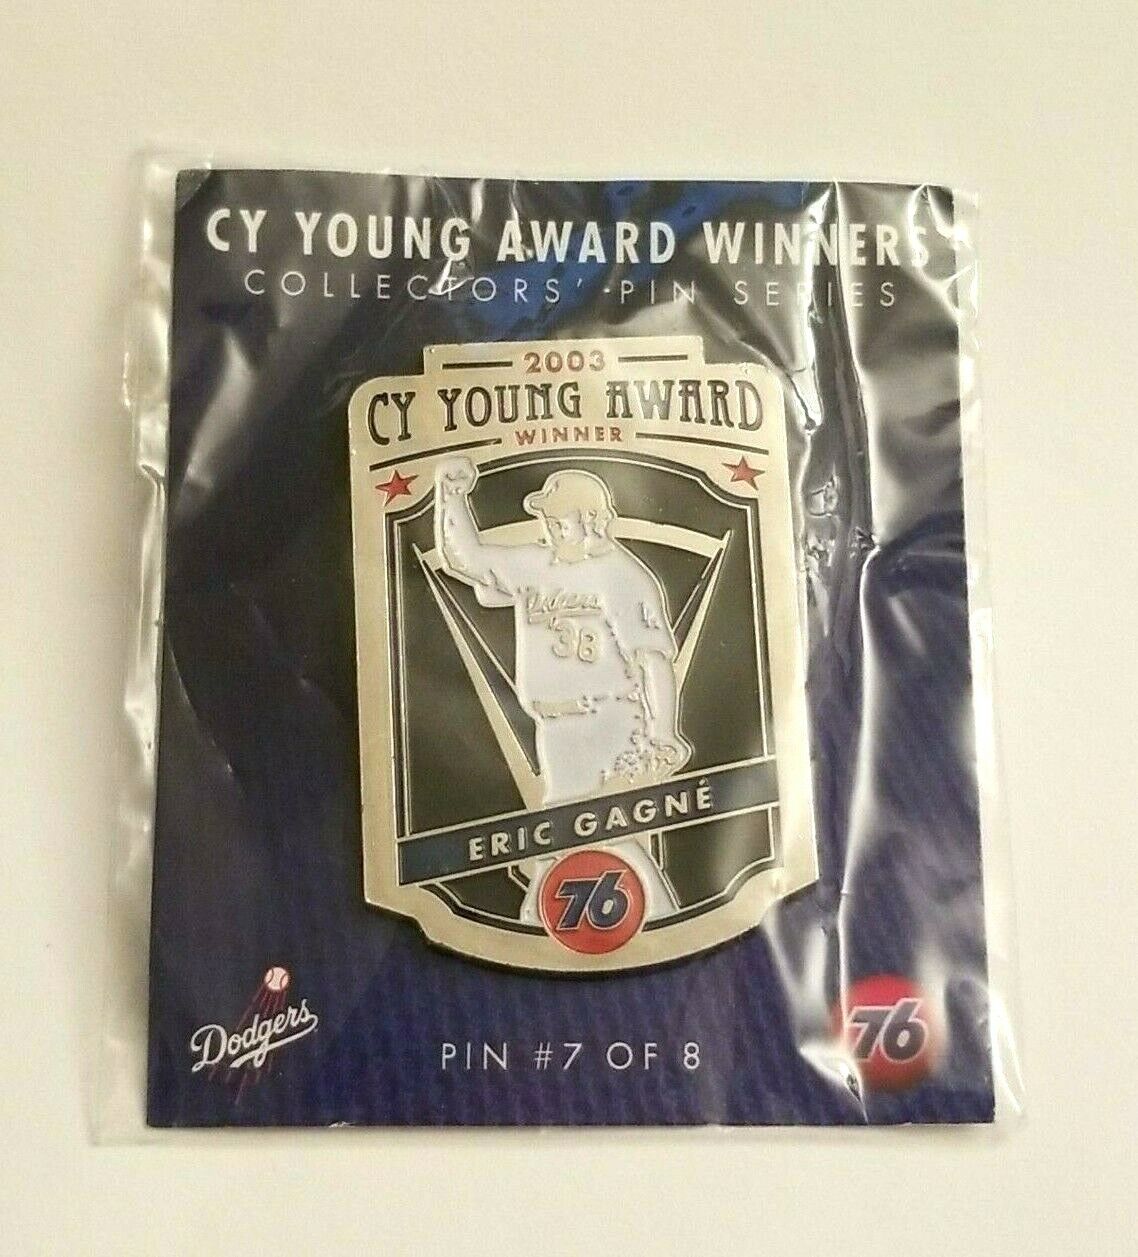 2003 CY Young Award Winner Pin #7 of 8 LA Dodgers Eric Gagne Pin 76 Gas Promo 